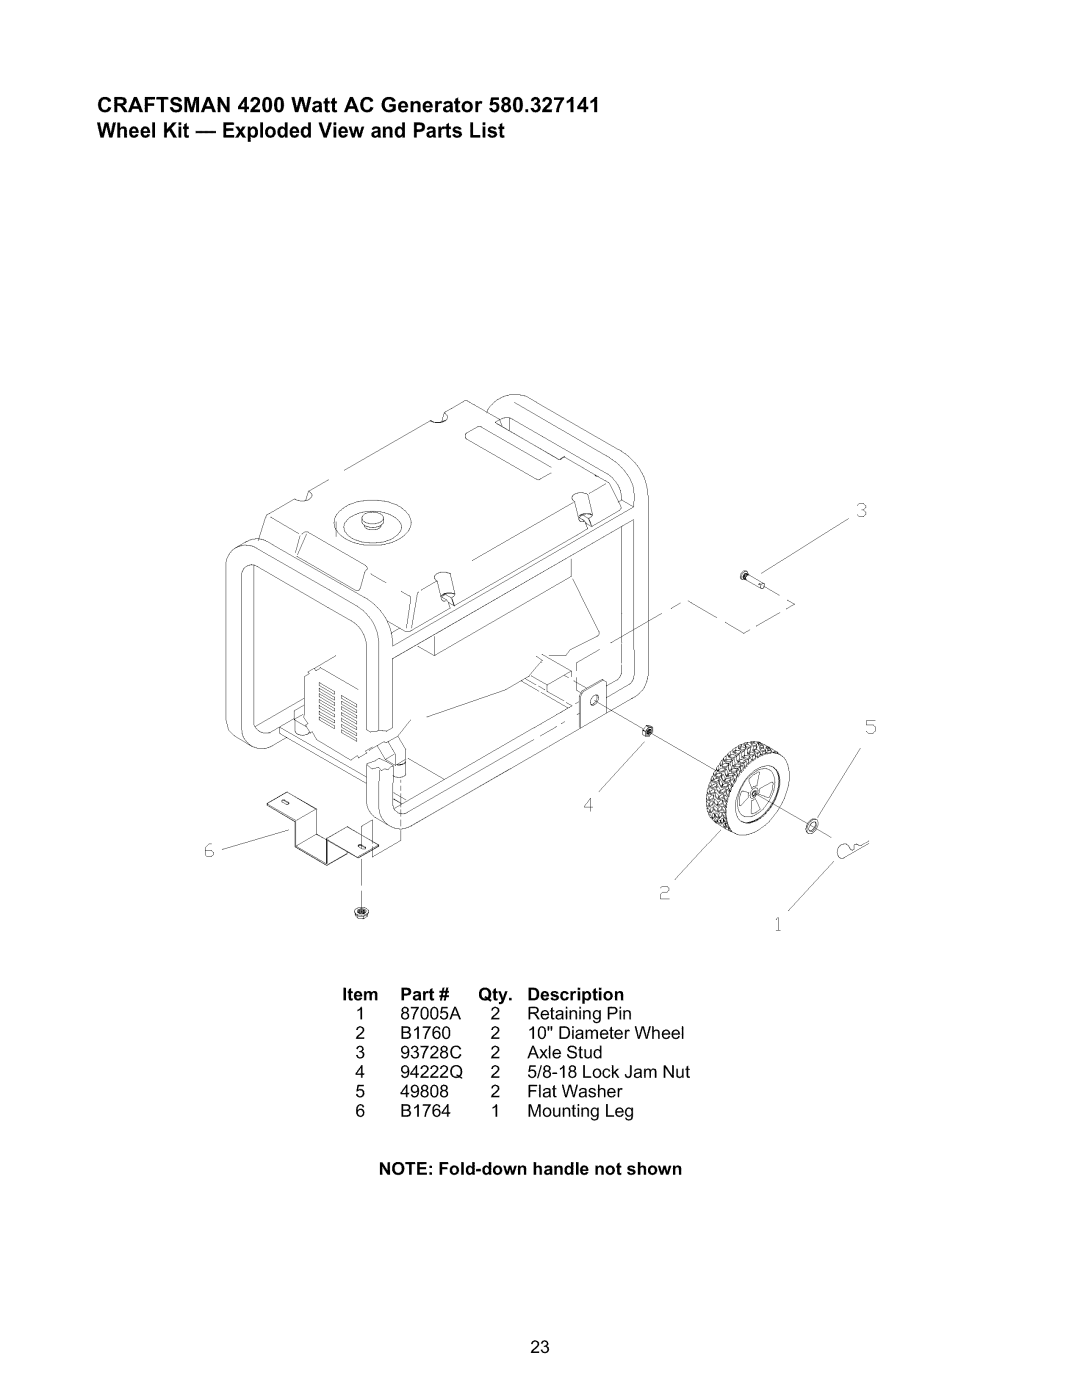 Craftsman 580.327141 owner manual CRAFTSMAN 4200 Watt AC Generator, Wheel Kit -- Exploded View and Parts List 